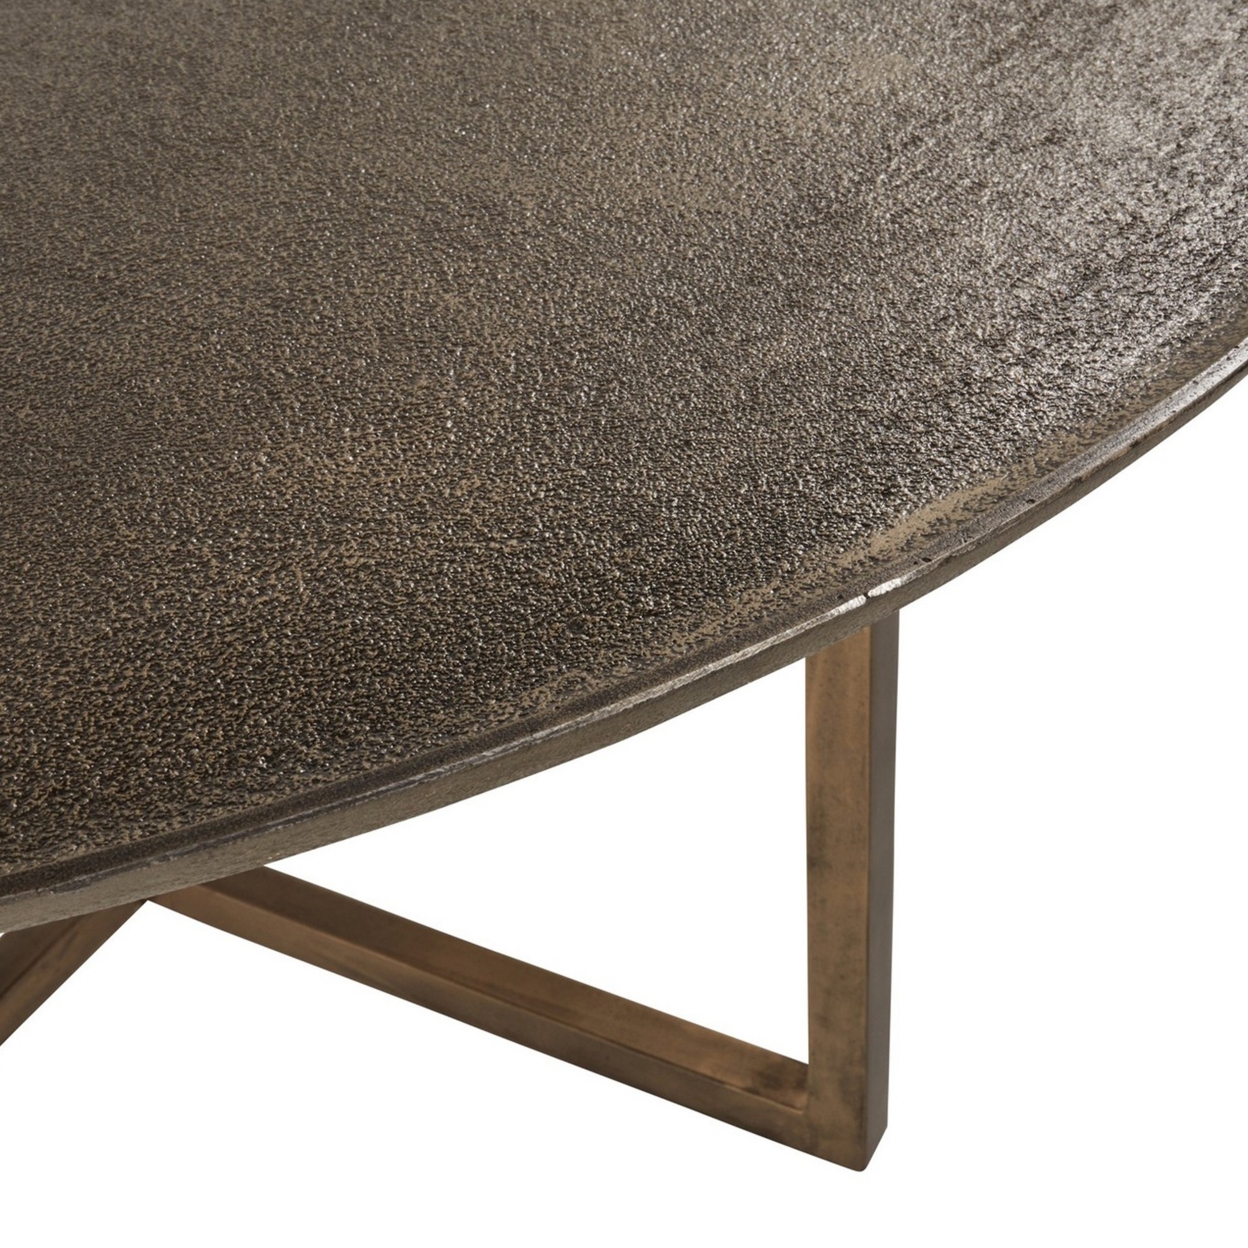 Rexi 40 Inch Aluminum Coffee Table, Round Tray Top, Bronze- Saltoro Sherpi